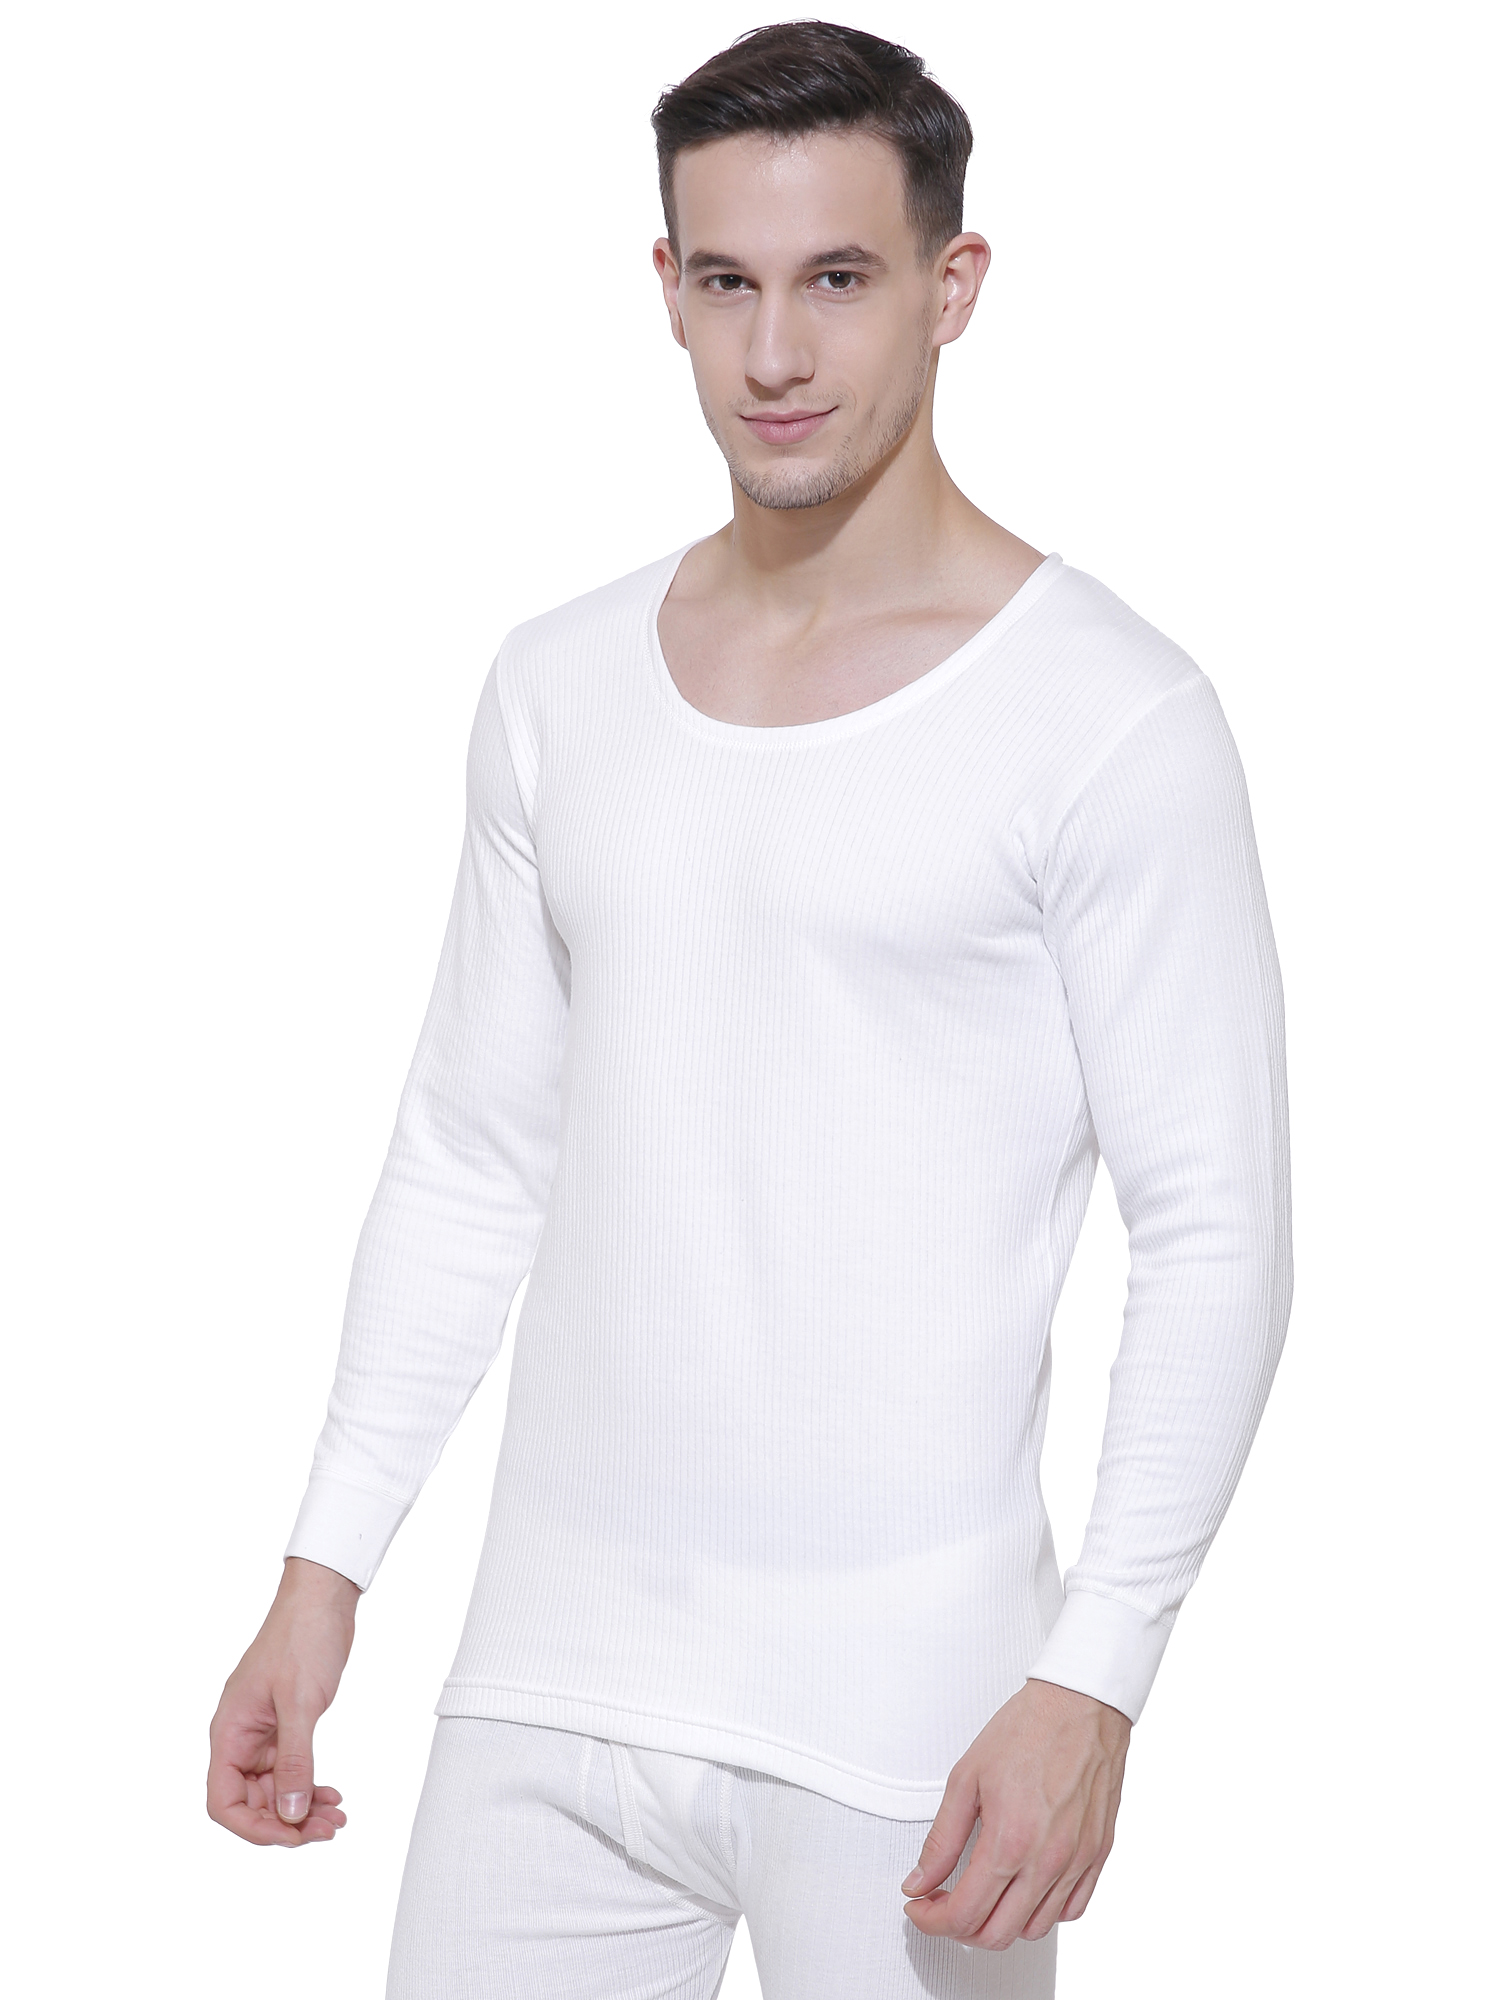 Buy Bodycare Insider Men's White Thermal Wear Online @ ₹390 from ShopClues